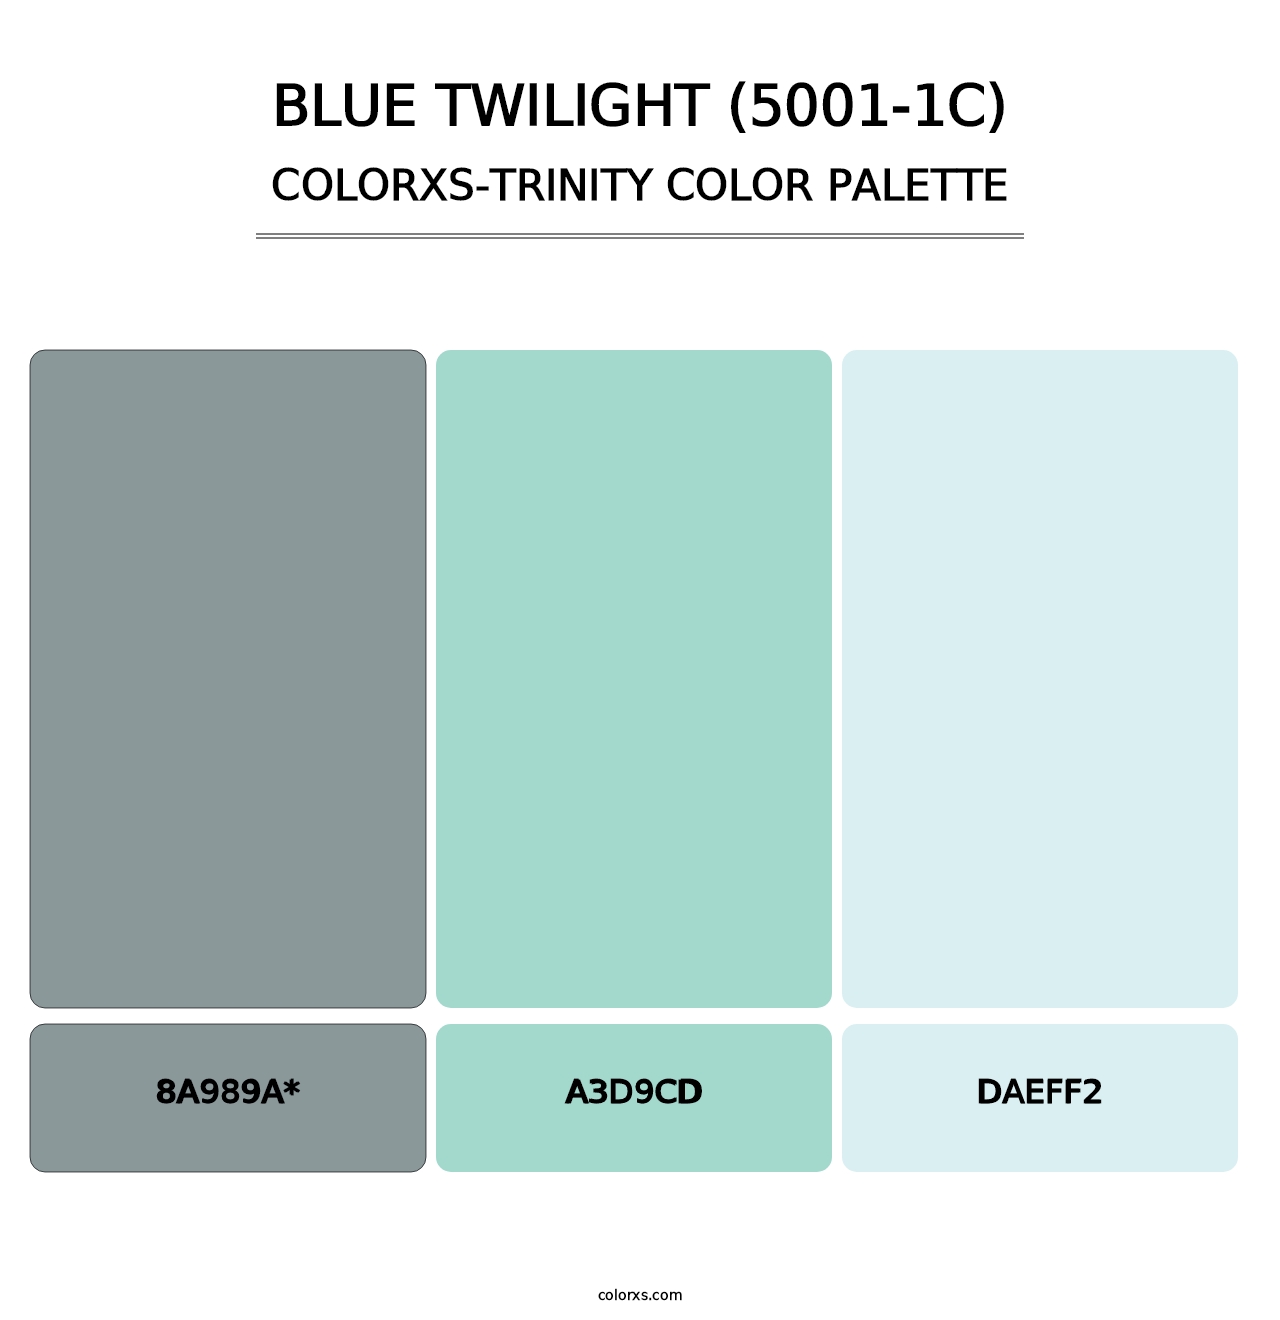 Blue Twilight (5001-1C) - Colorxs Trinity Palette